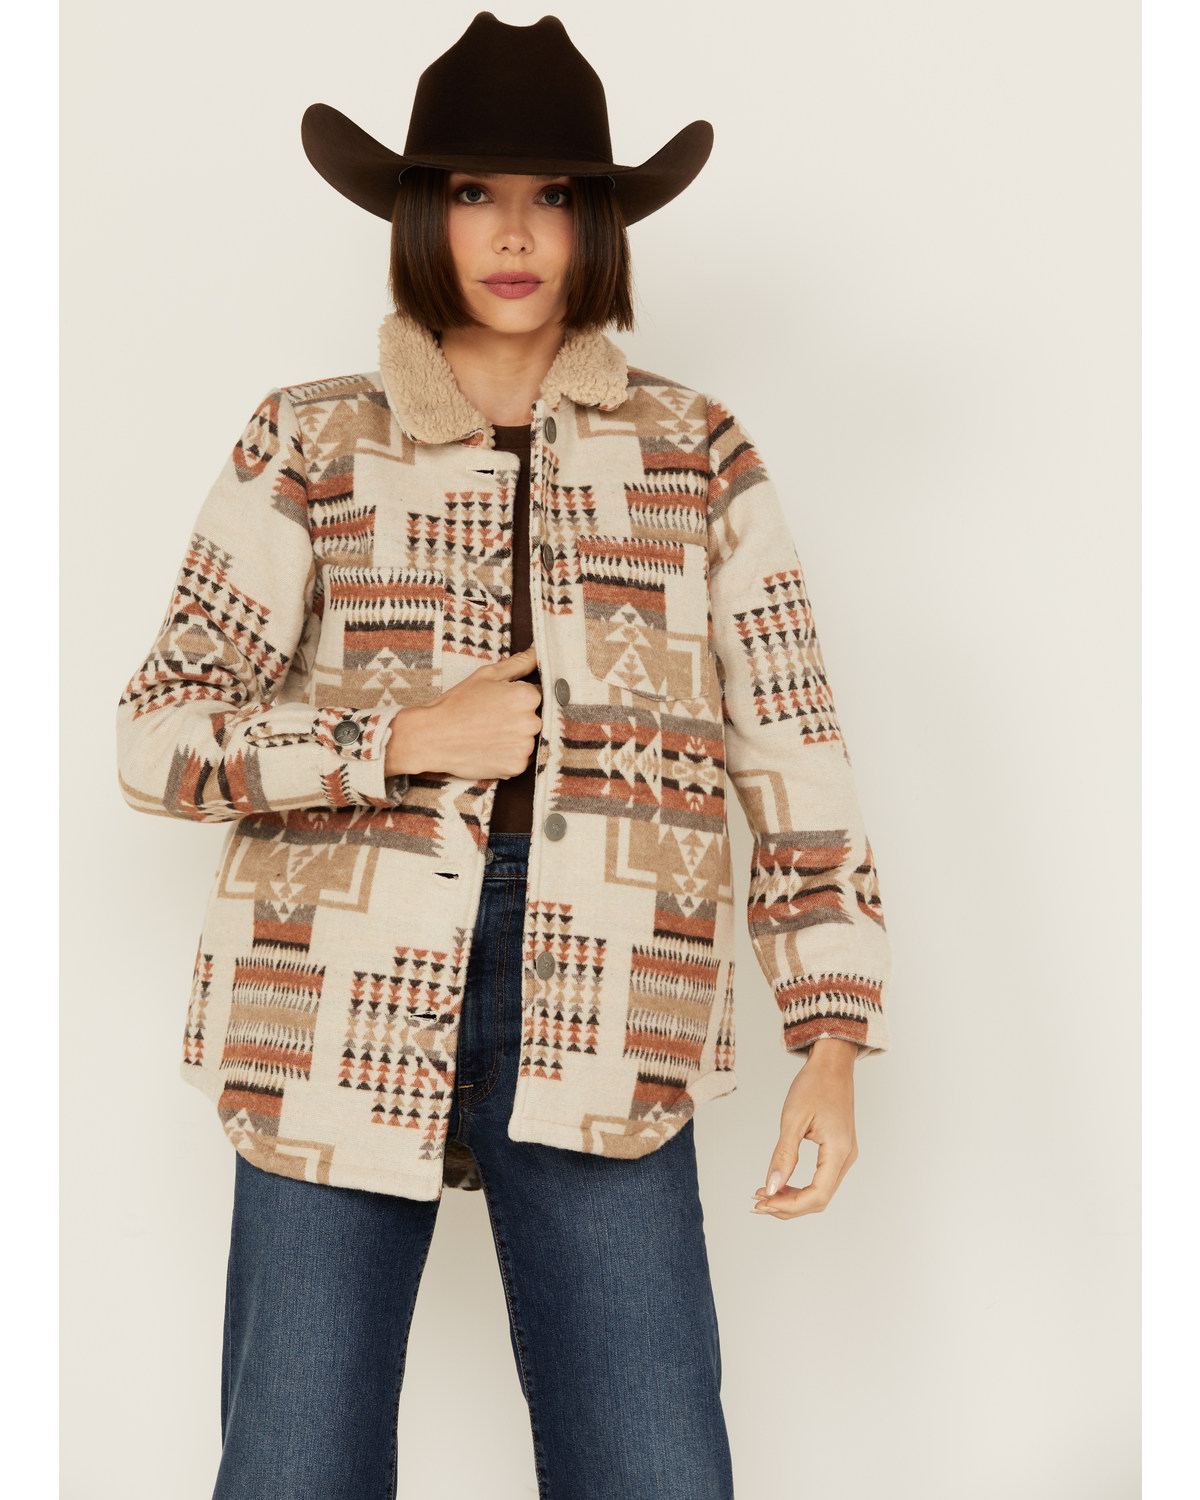 Cotton & Rye Women's Southwestern Print Sherpa Lined Jacket